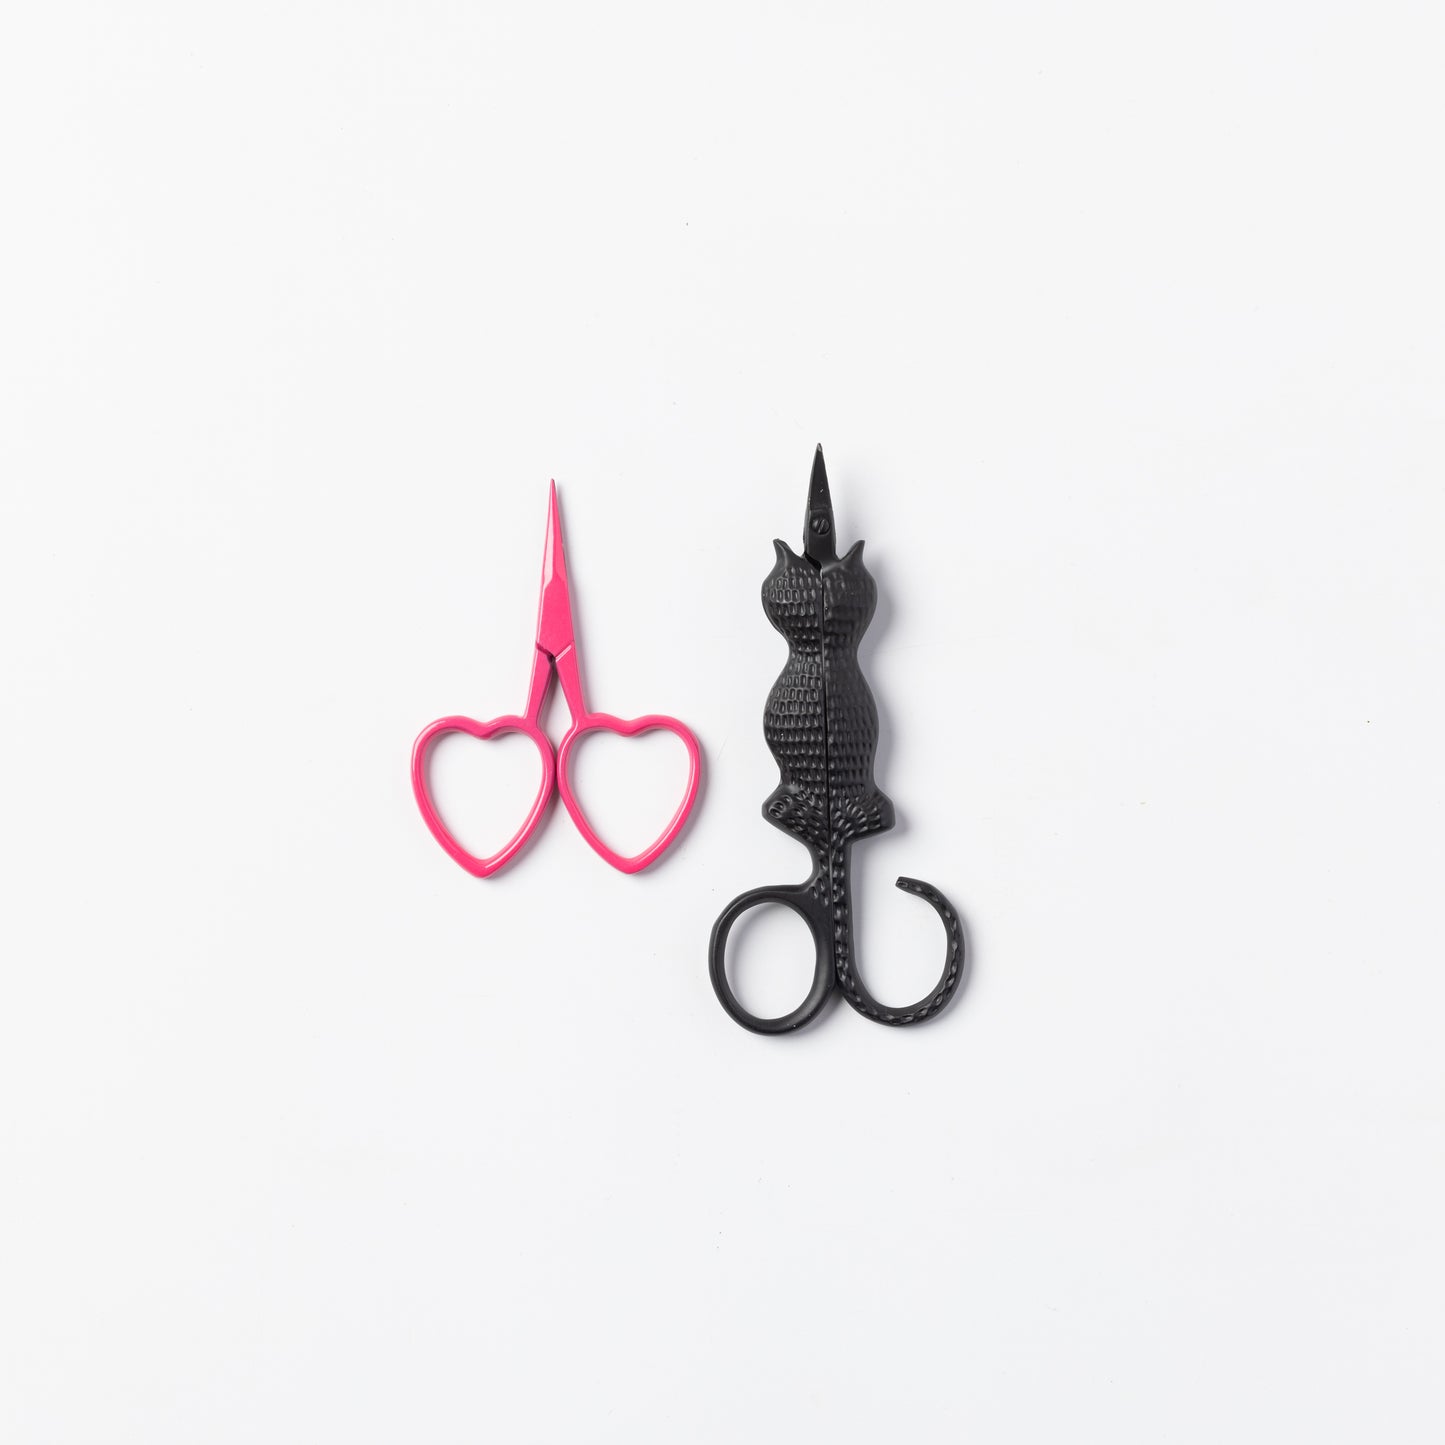 Character Scissors